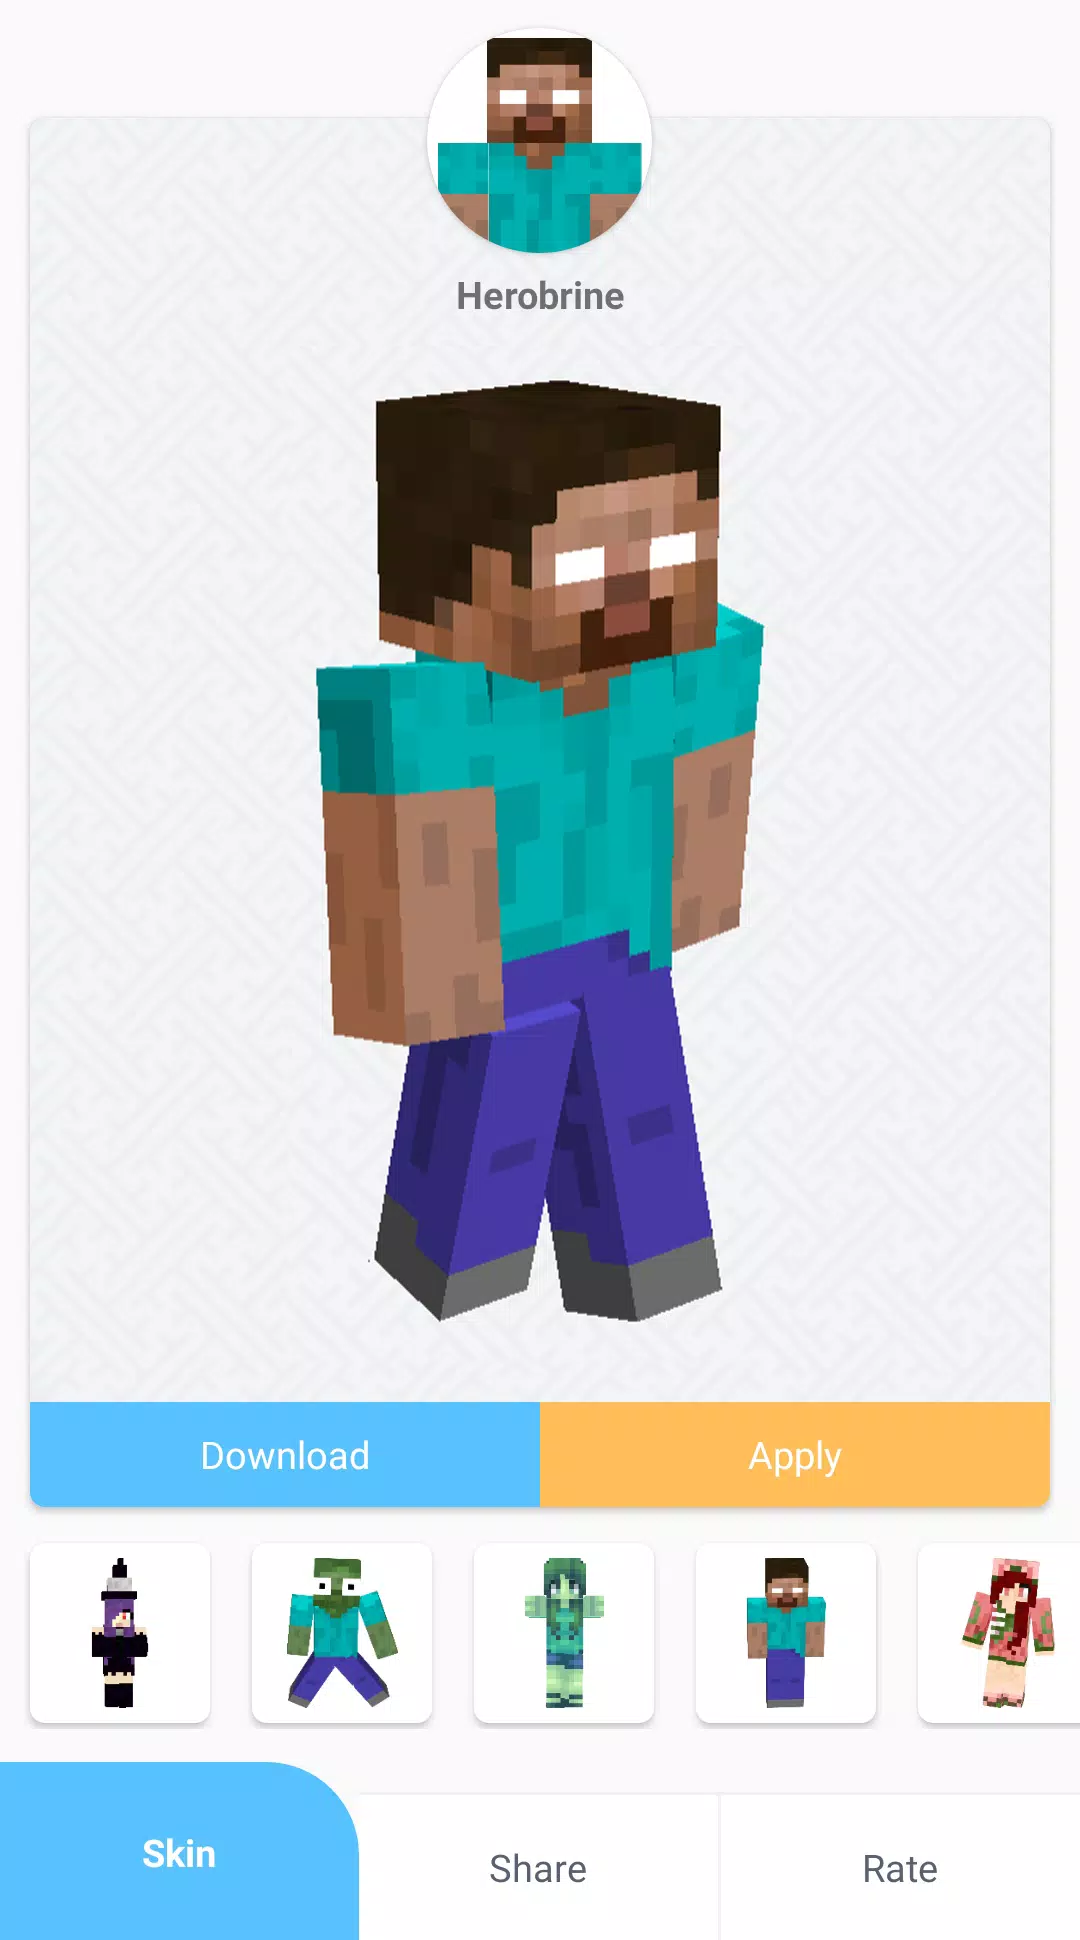 Herobrine Skins For Minecraft (Devcloudart) APK for Android - Free Download